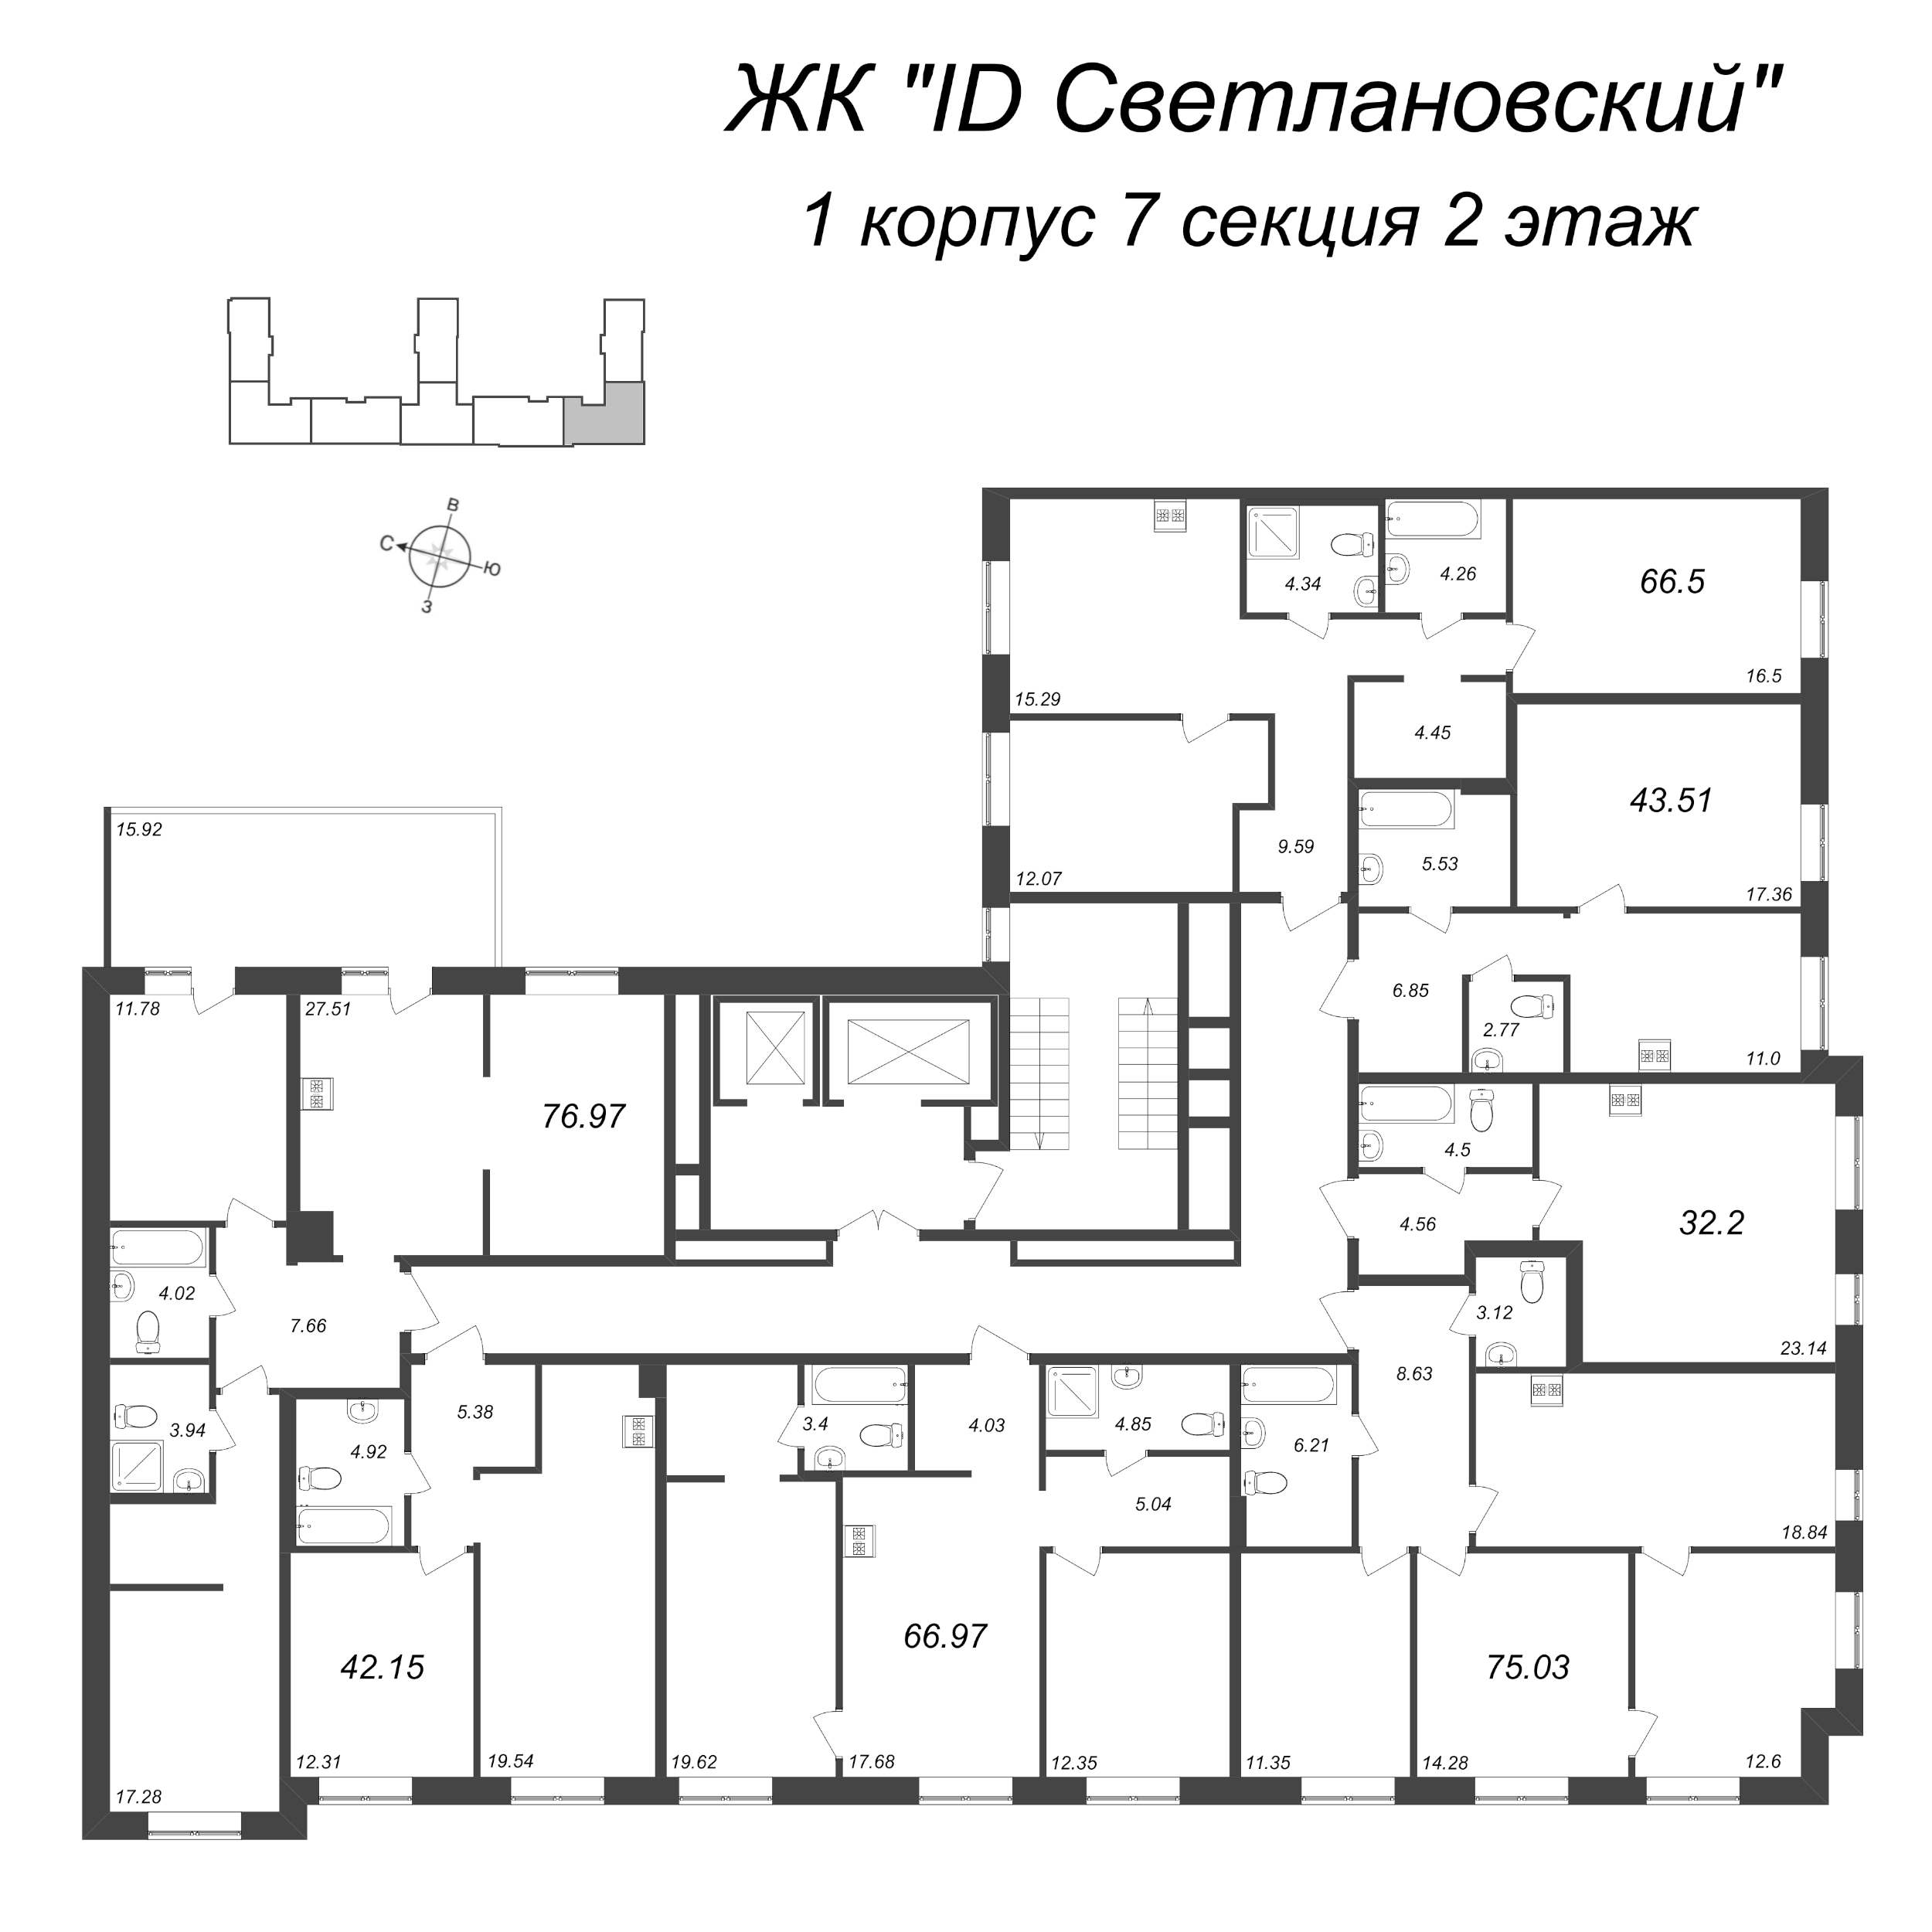 3-комнатная (Евро) квартира, 76.97 м² - планировка этажа